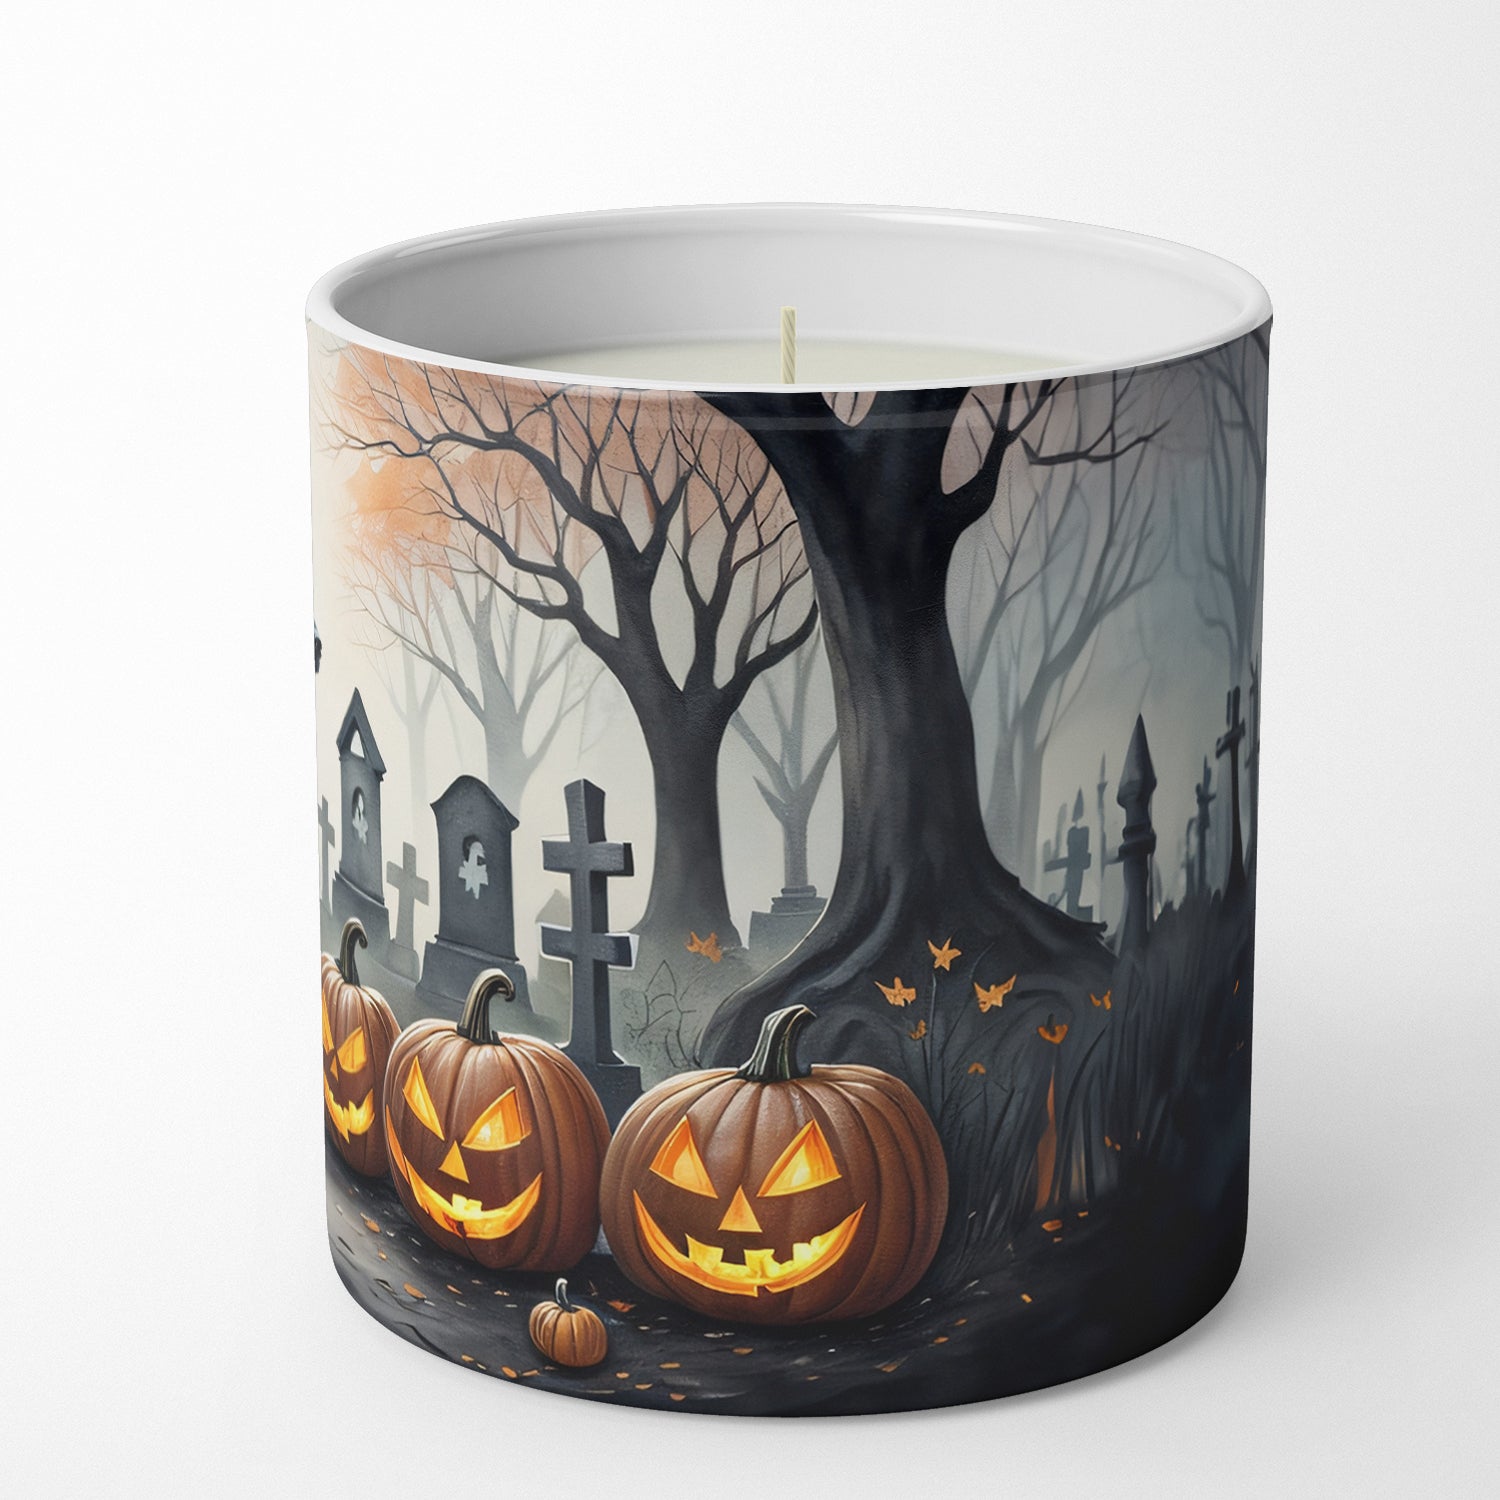 Doberman Pinscher Spooky Halloween Decorative Soy Candle